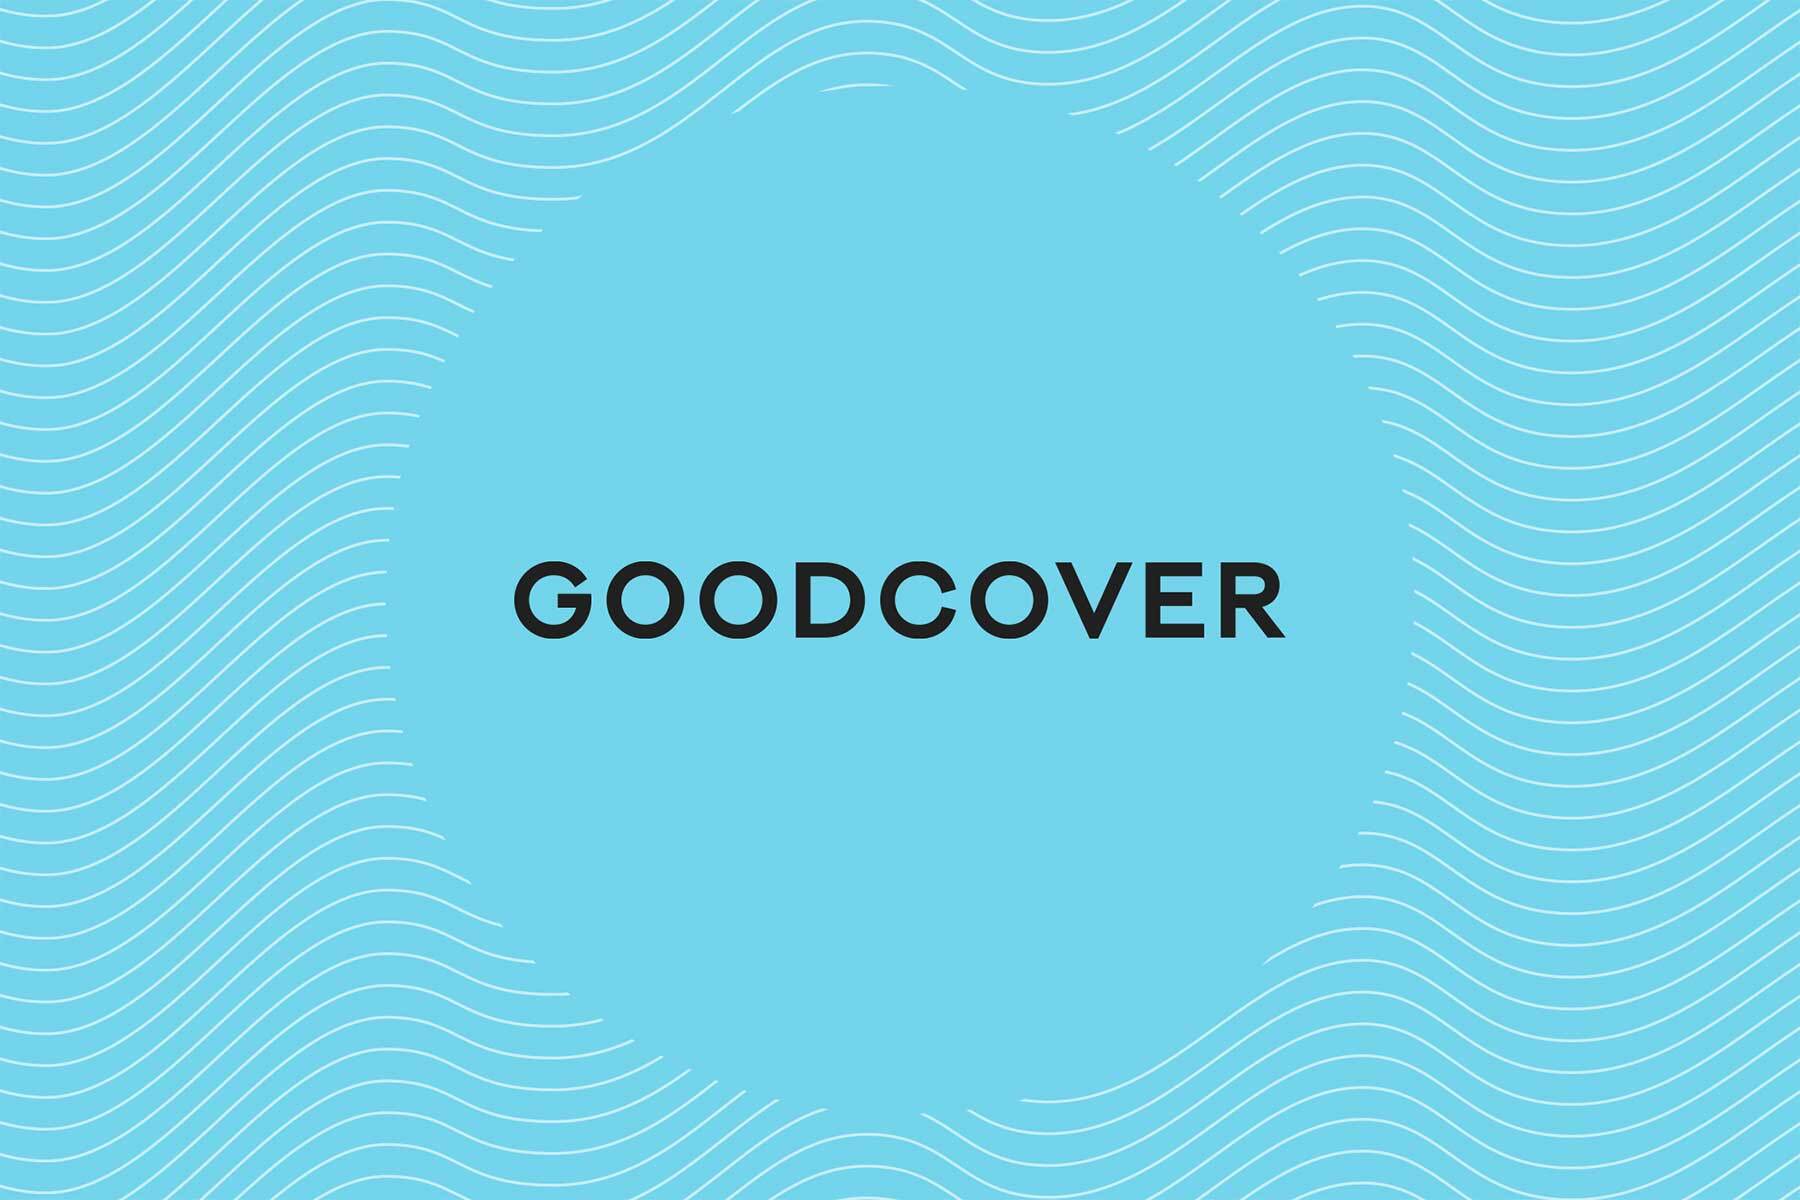 Goodcover Member Dividend 2020